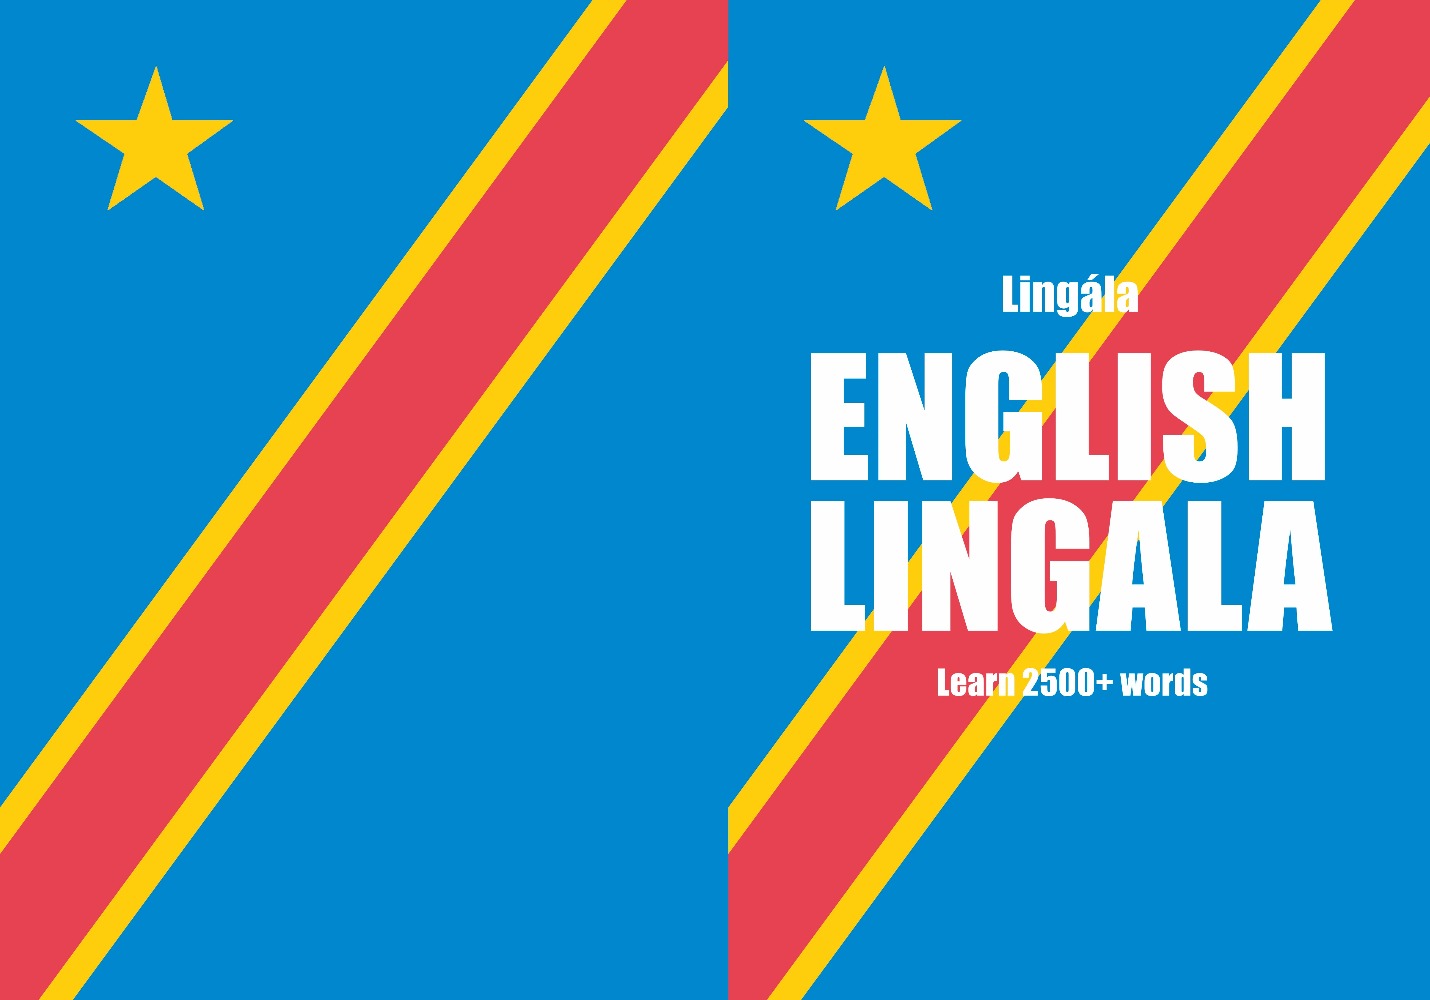 Lingala language learning notebook cover